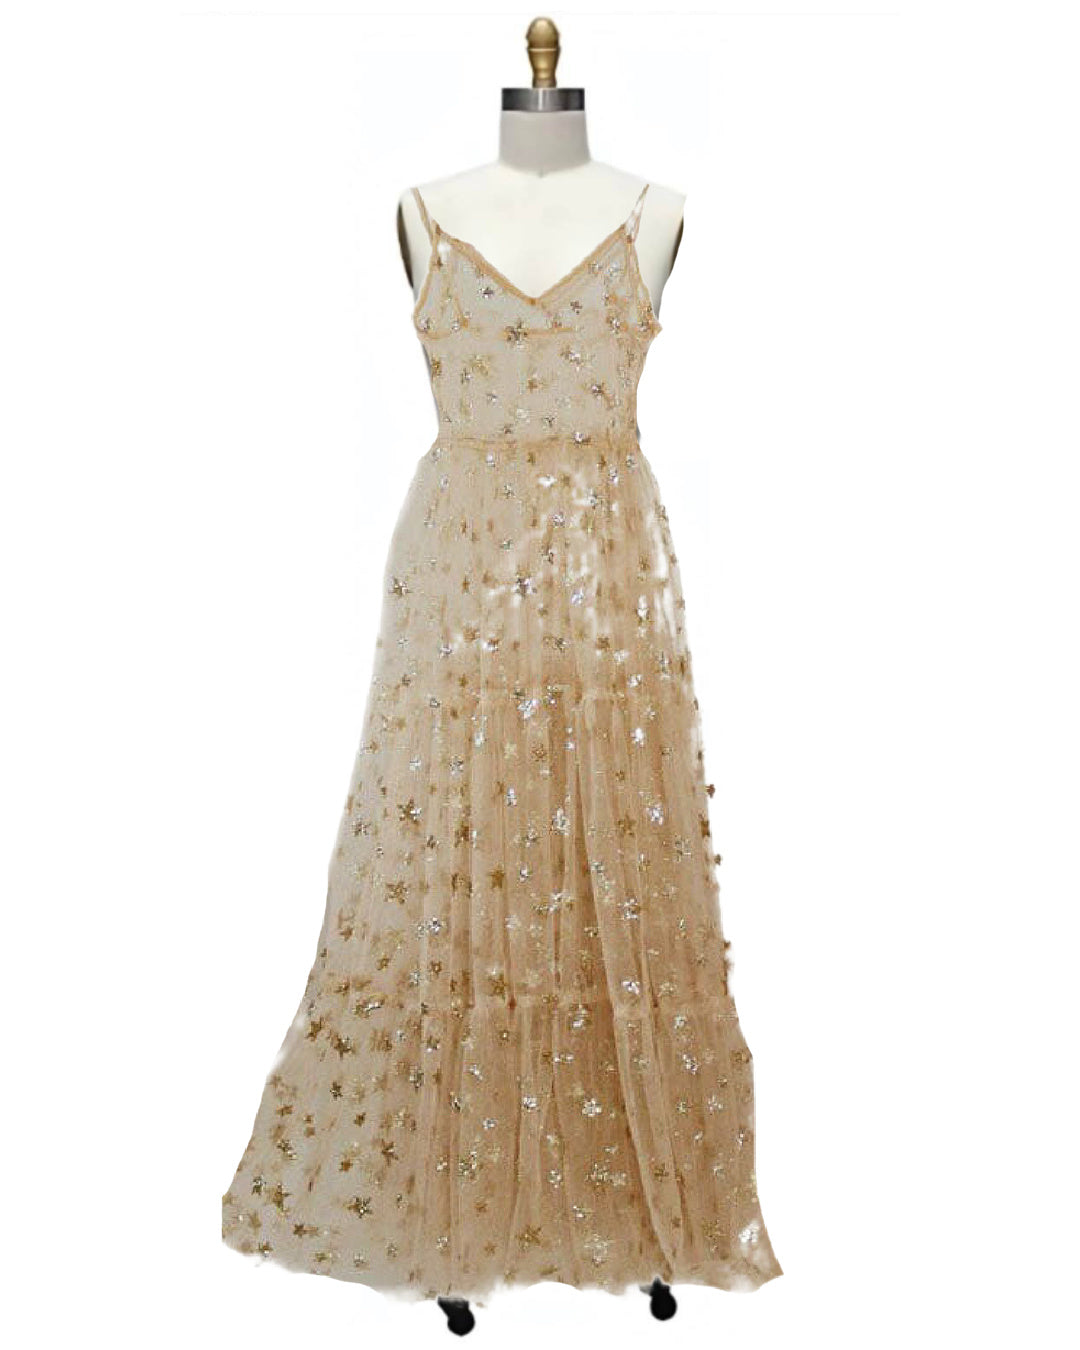 Starpower- the Sheer 1930s Star Covered  Dress